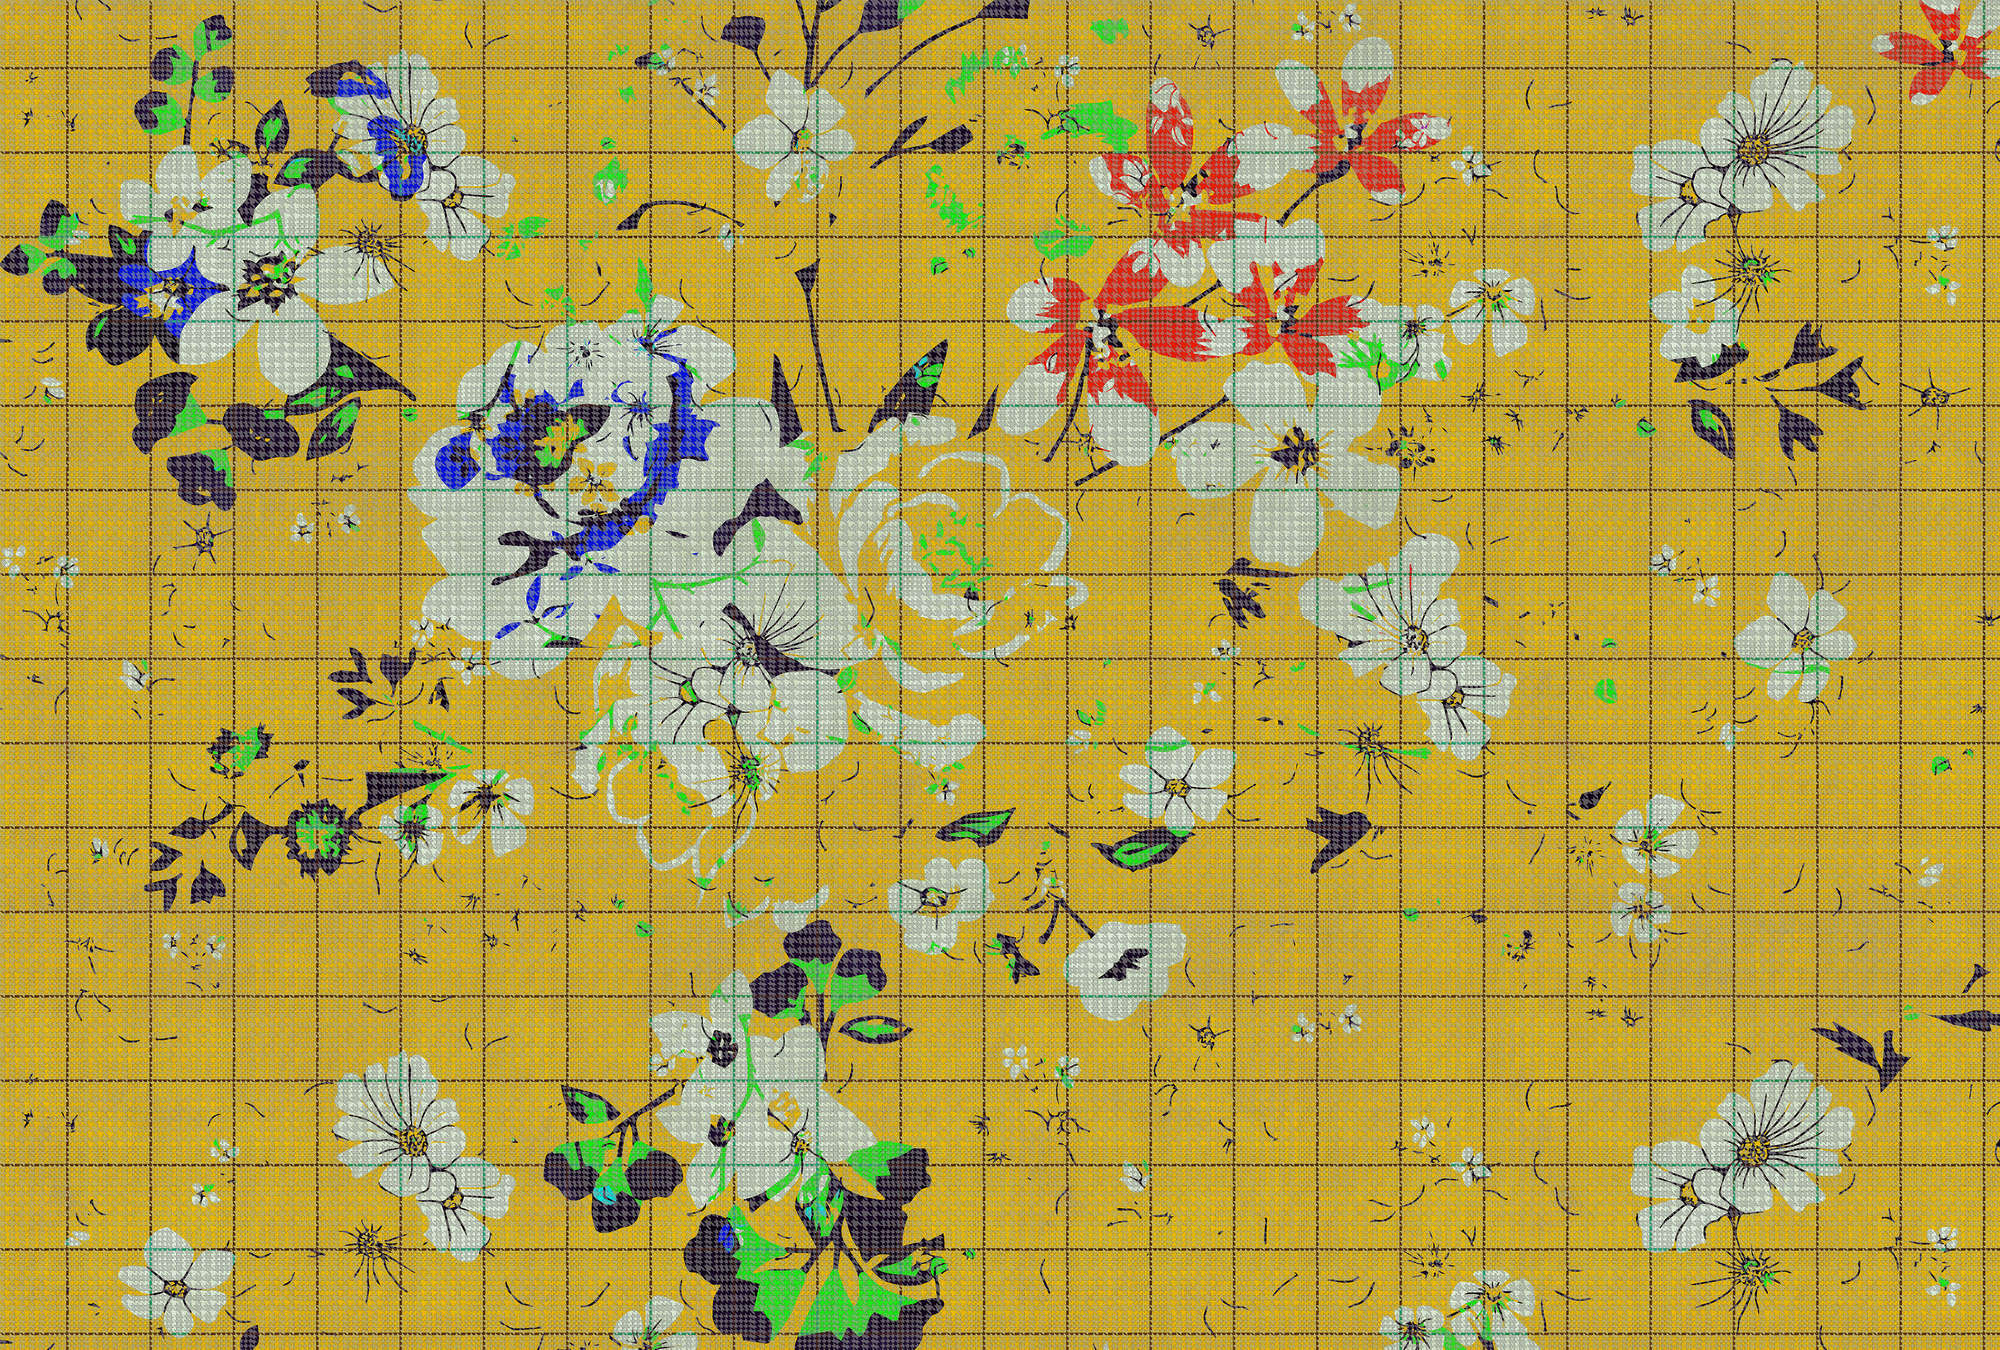             Flower plaid 1 - Fototapete buntes Blumenmosaik Gelb mit karierter Optik – Blau, Gelb | Mattes Glattvlies
        